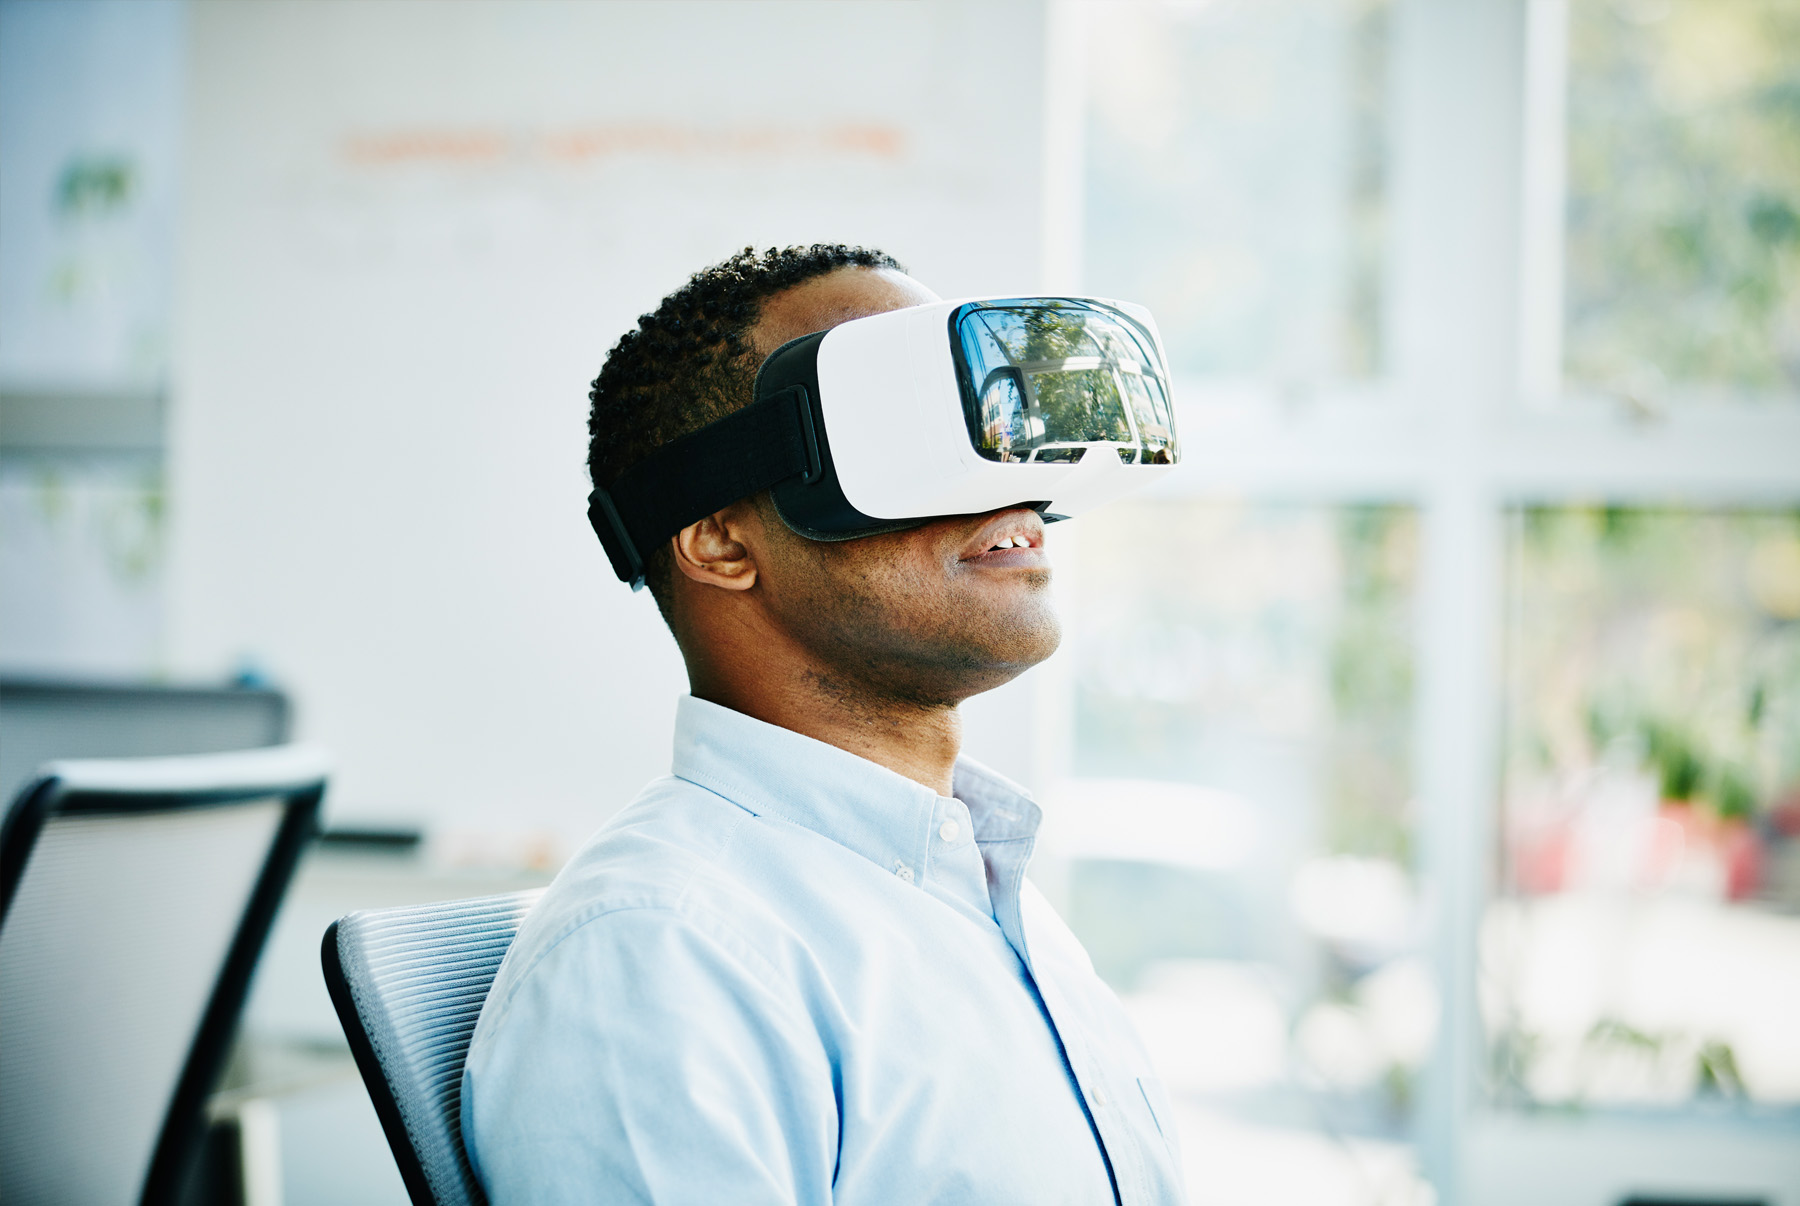 VR-headset-imagine-future-man-office-thumb